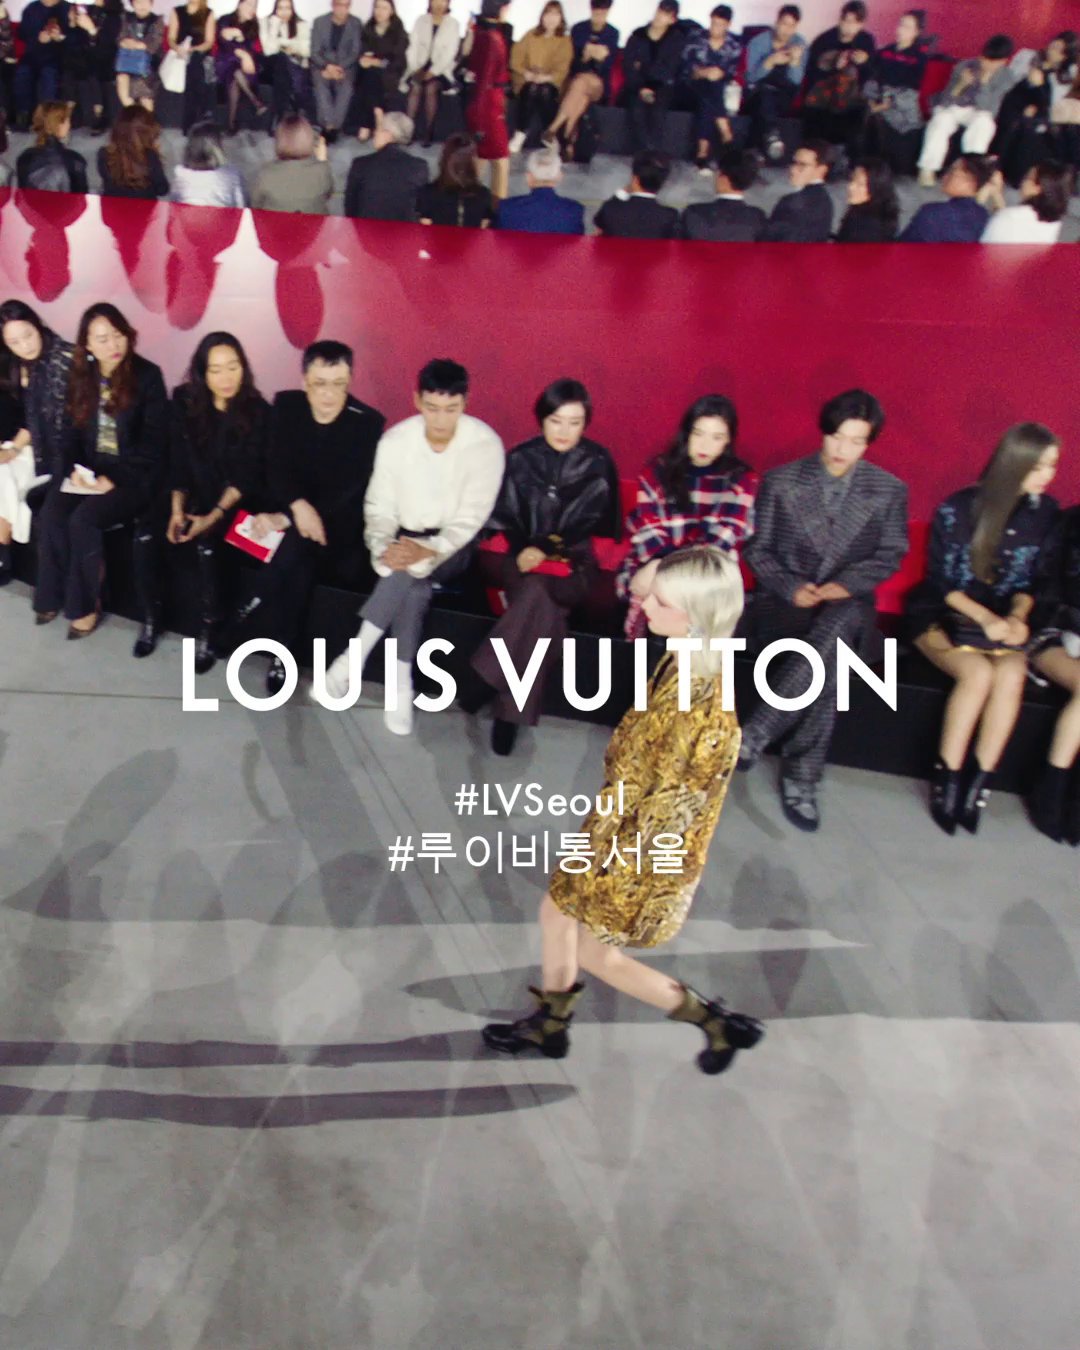 Louis Vuitton Seoul Women's Fashion Show Highlights  Highlights from the Louis  Vuitton Seoul Women's Fashion Show. Louis Vuitton presented a mix of recent  looks at the Women's Fashion Show in Seoul.